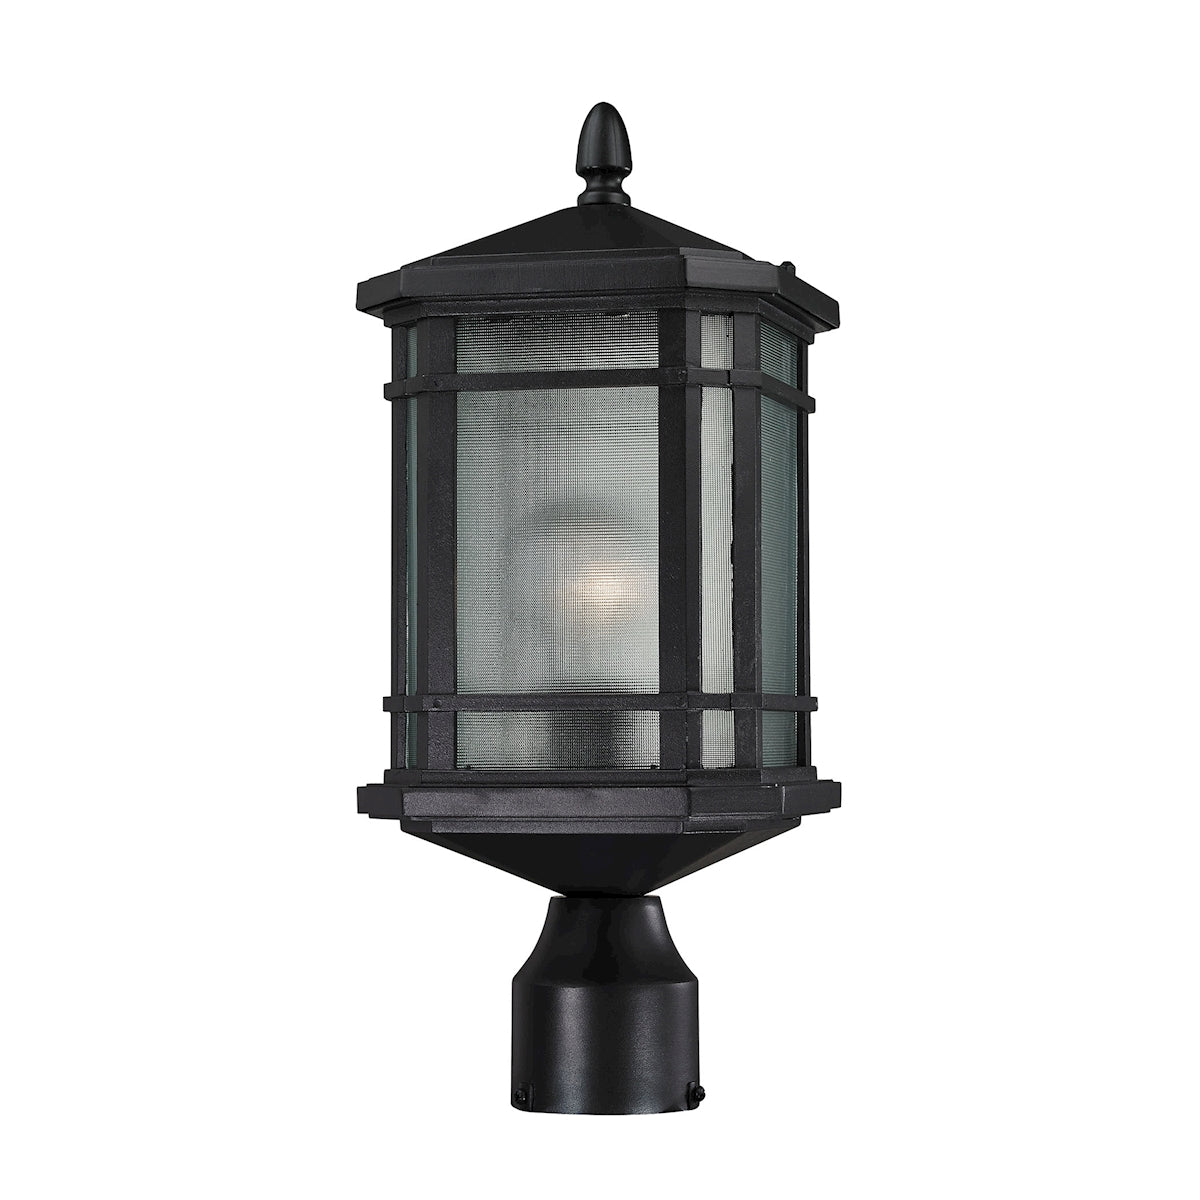 ELK Lighting 87044/1 Lowell 1-Light Outdoor Post Lantern in Matte Black